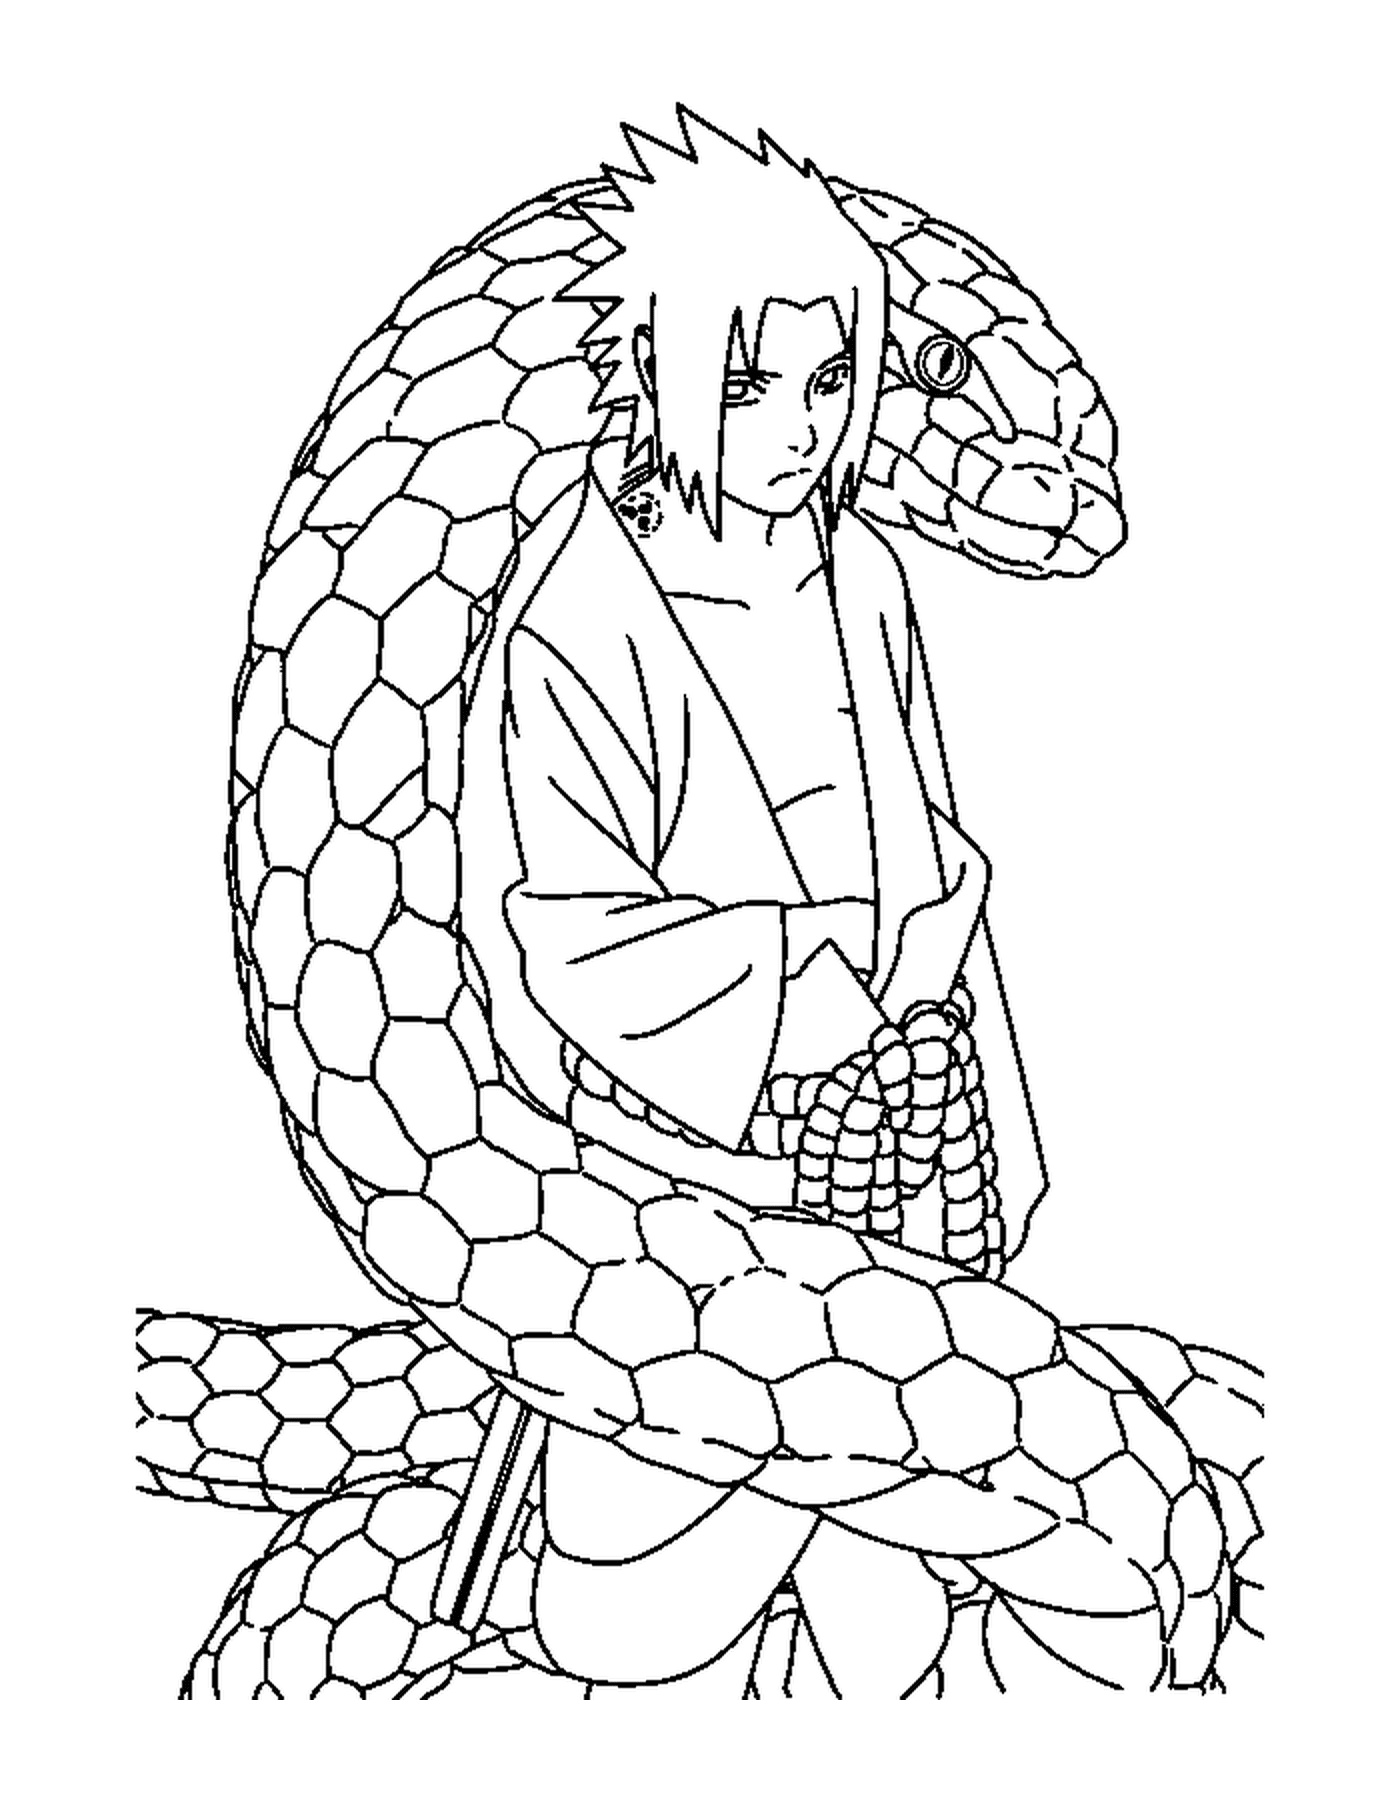  A man sitting on a big snake 